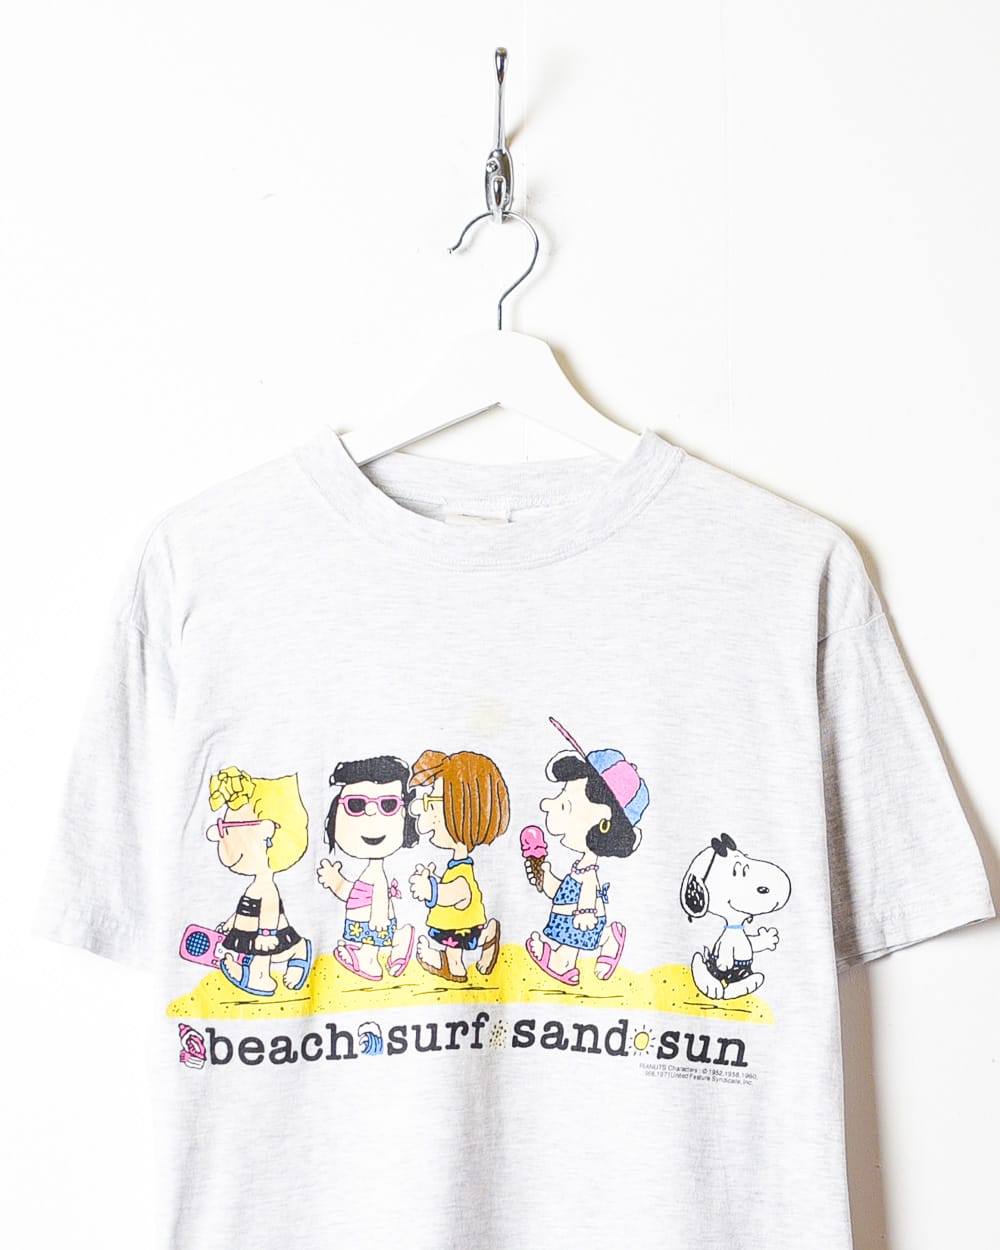 Stone Snoopy Beach Surf Sand Sun Single Stitch T-Shirt - Small